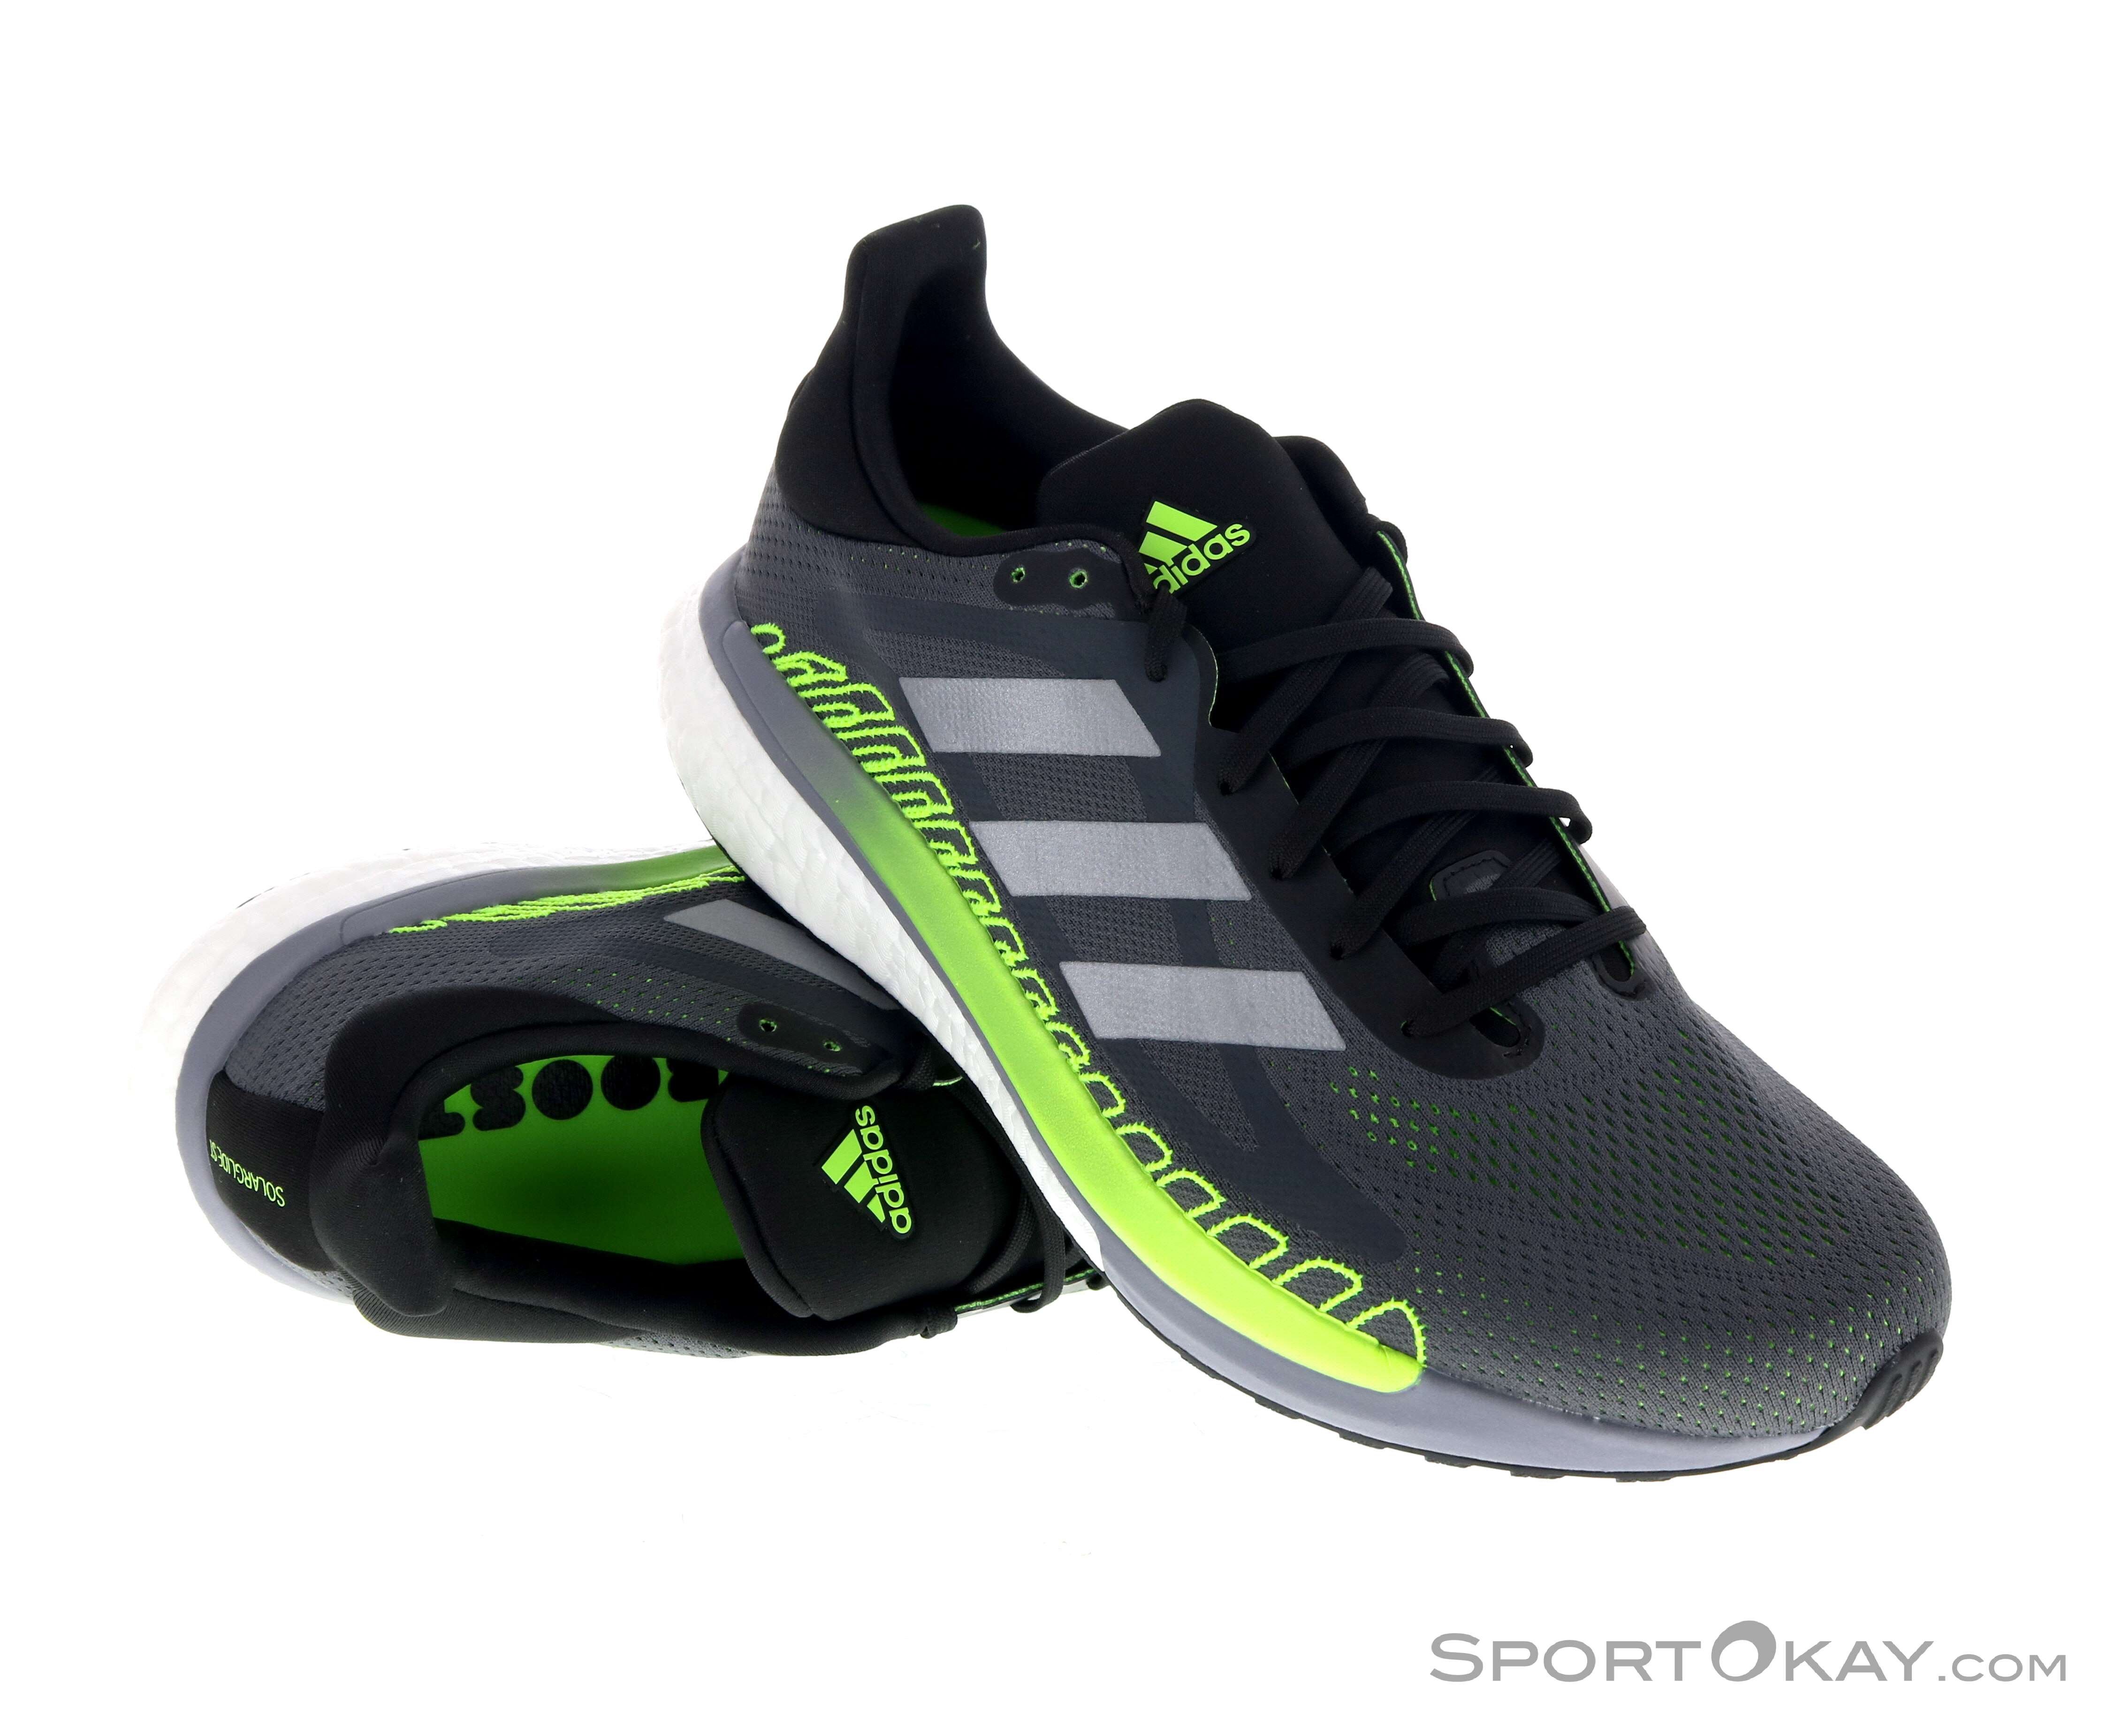 adidas solar glide st men's running shoes